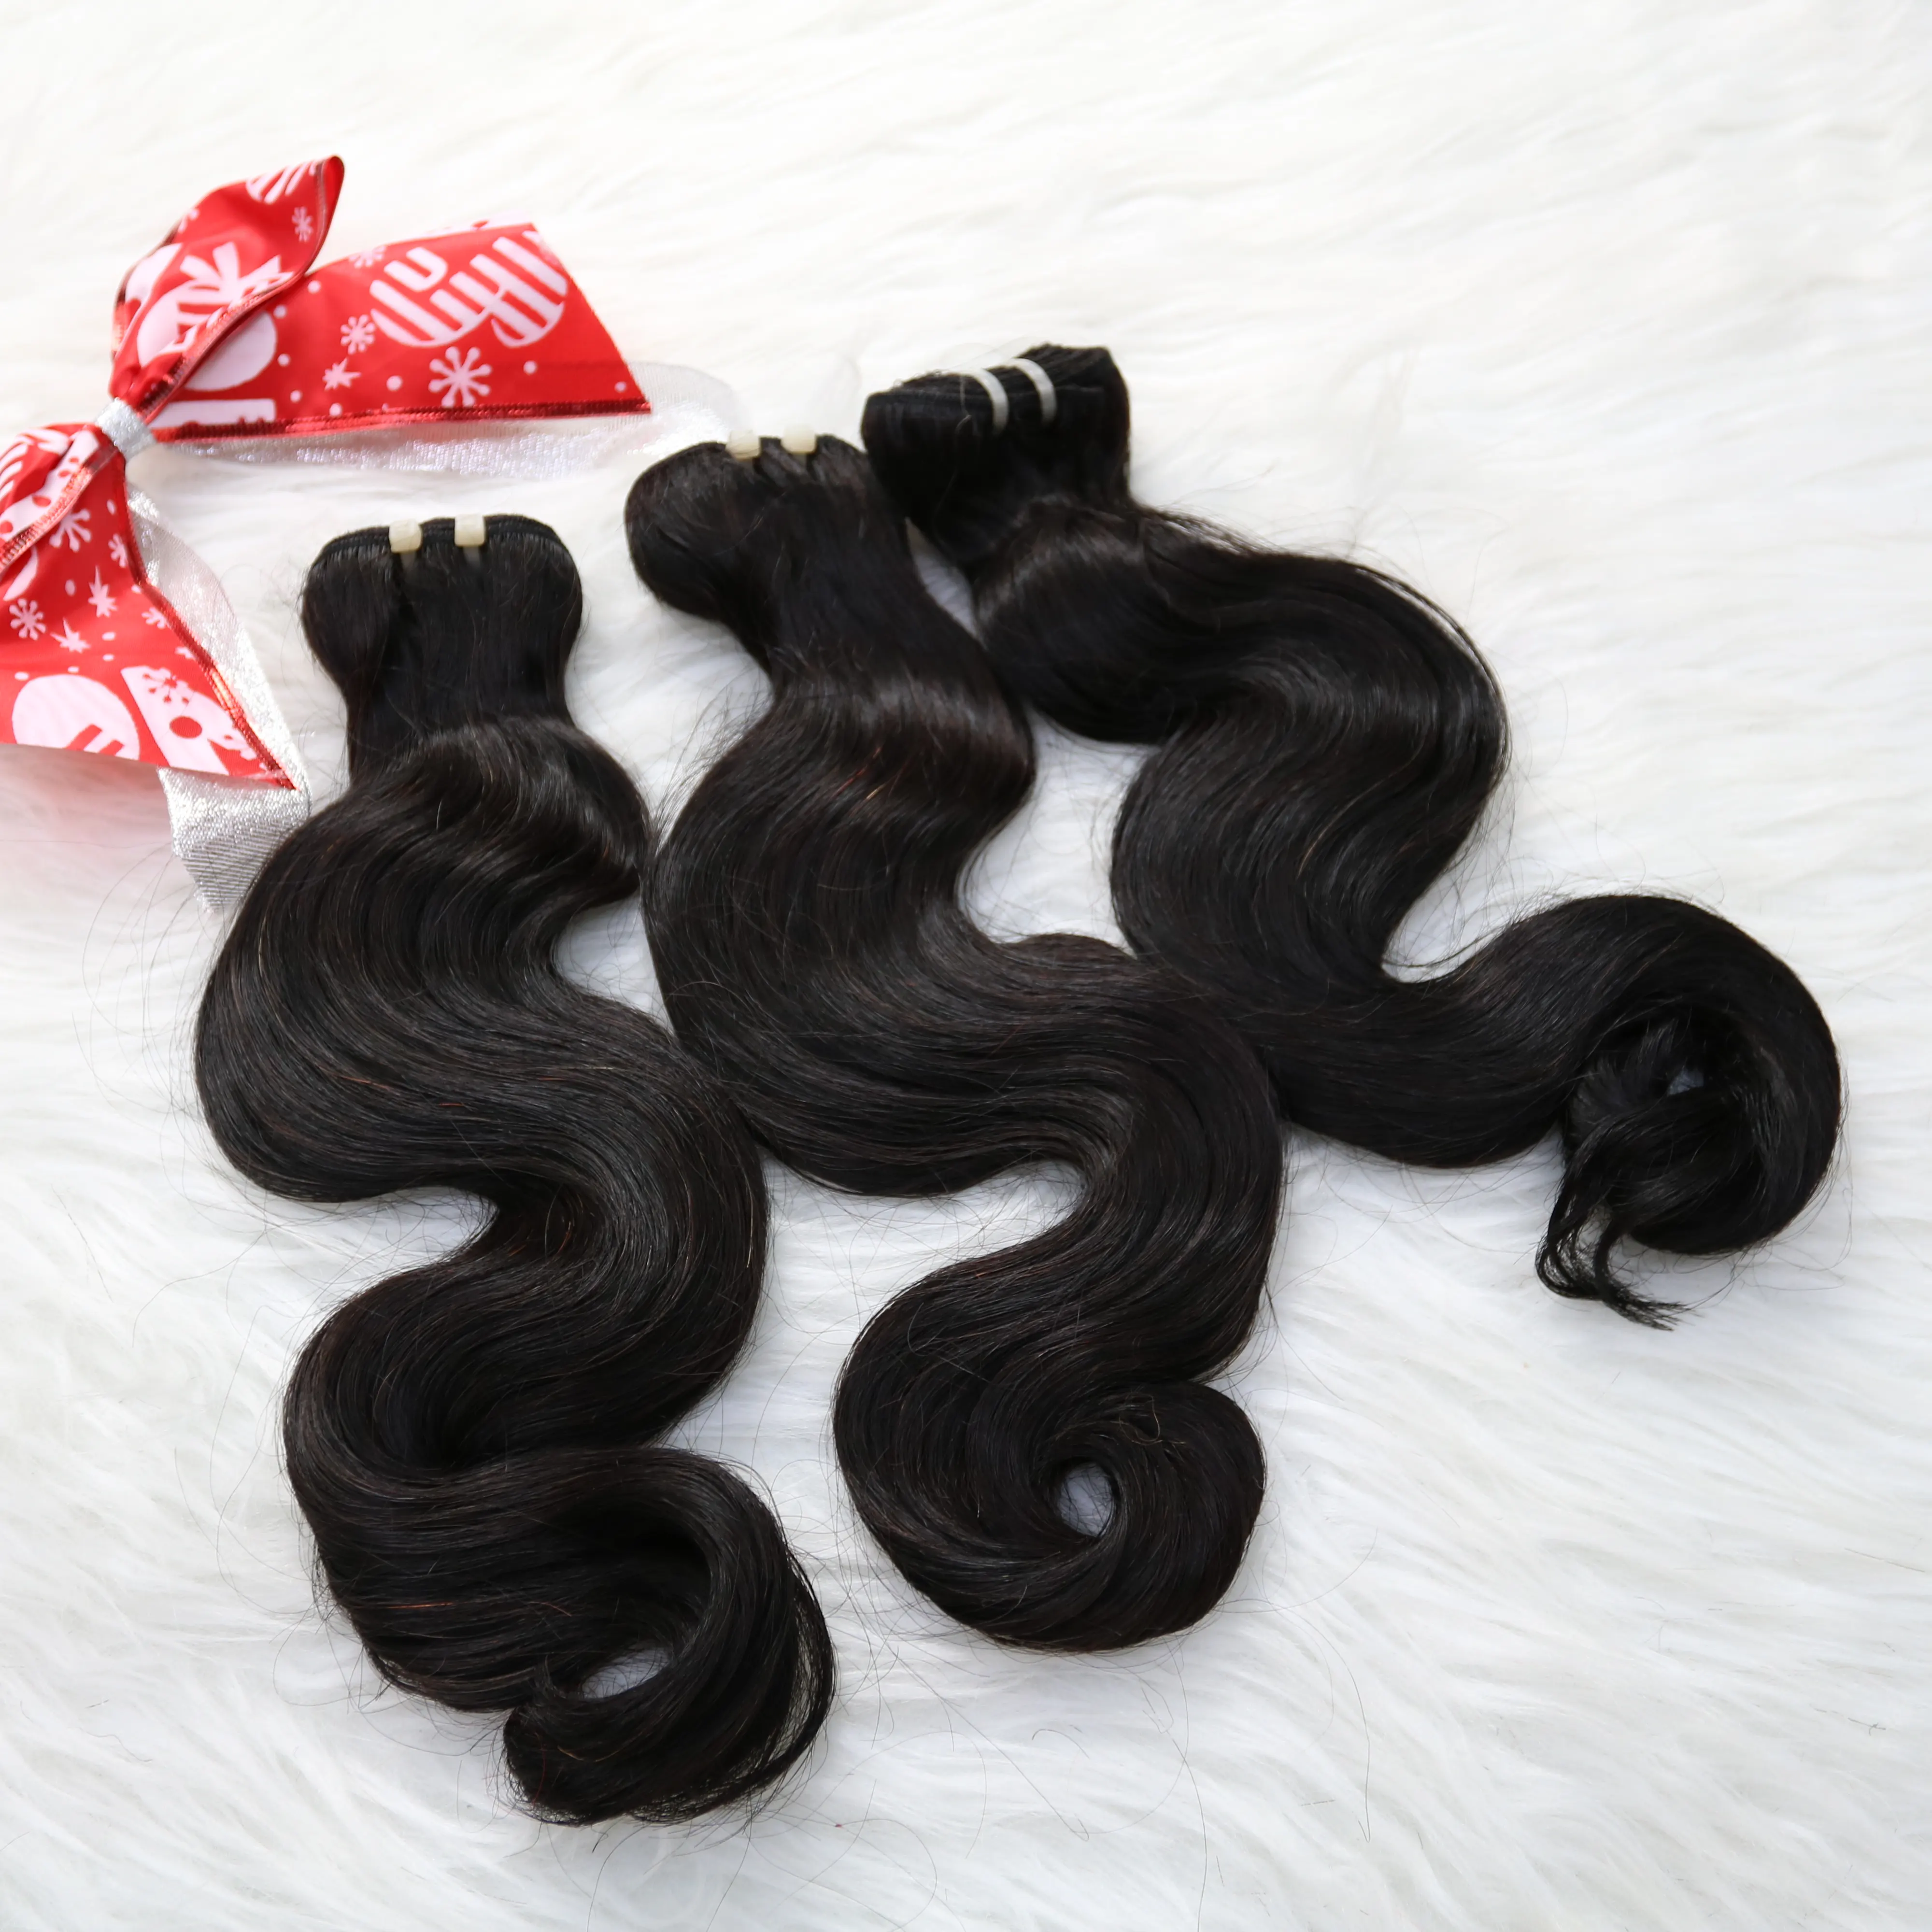 Michair Company - Wholesale Human Hair Extension Body Wave Cheap With Lace Closure Raw Virgin Hair Bundles Vendor